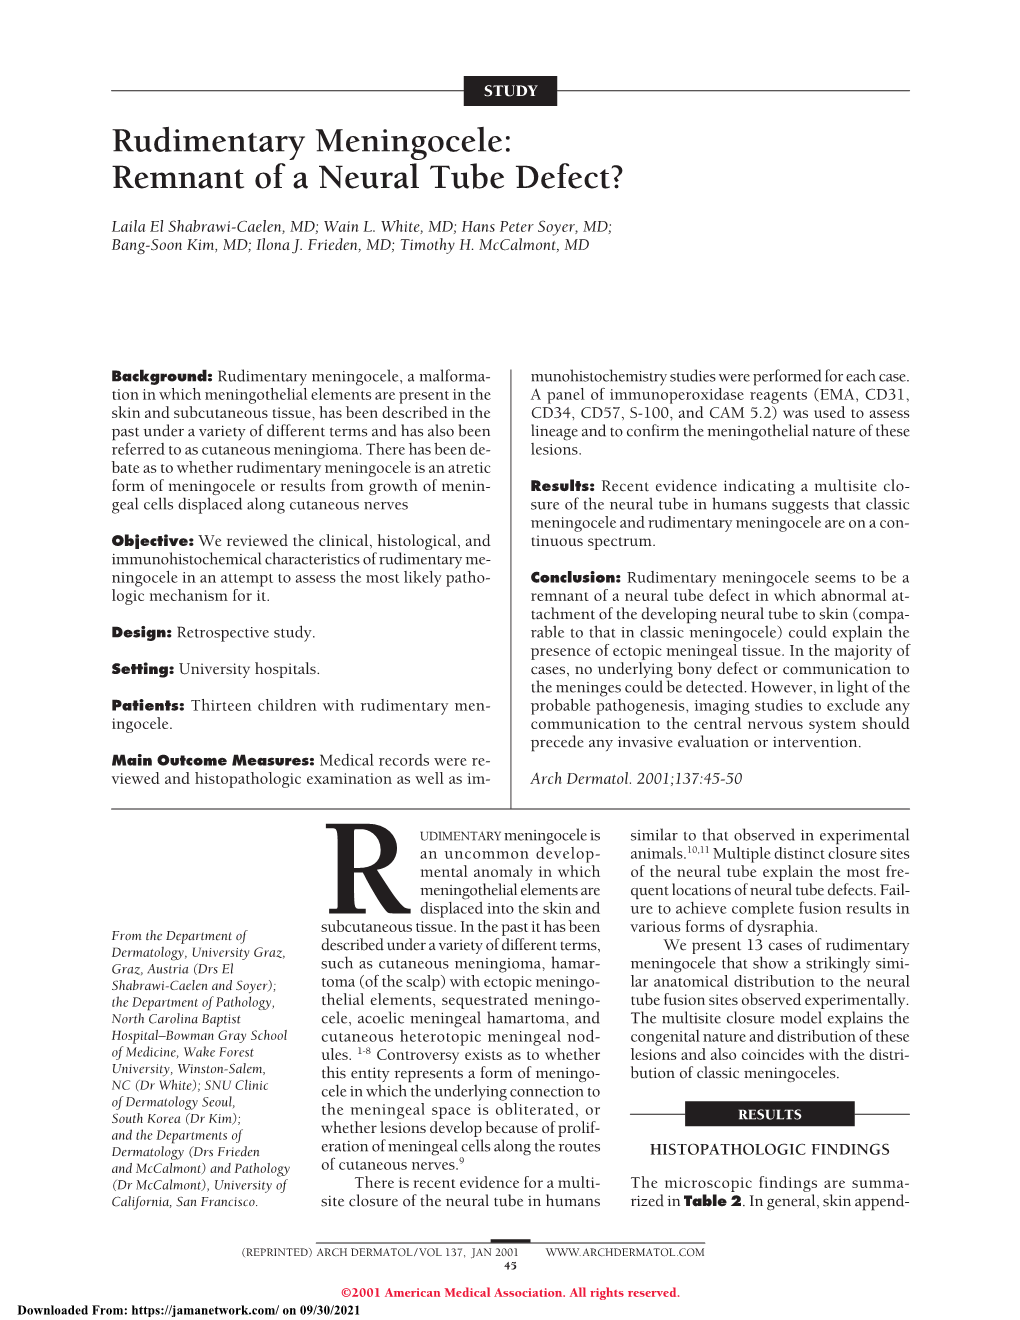 Rudimentary Meningocele: Remnant of a Neural Tube Defect?